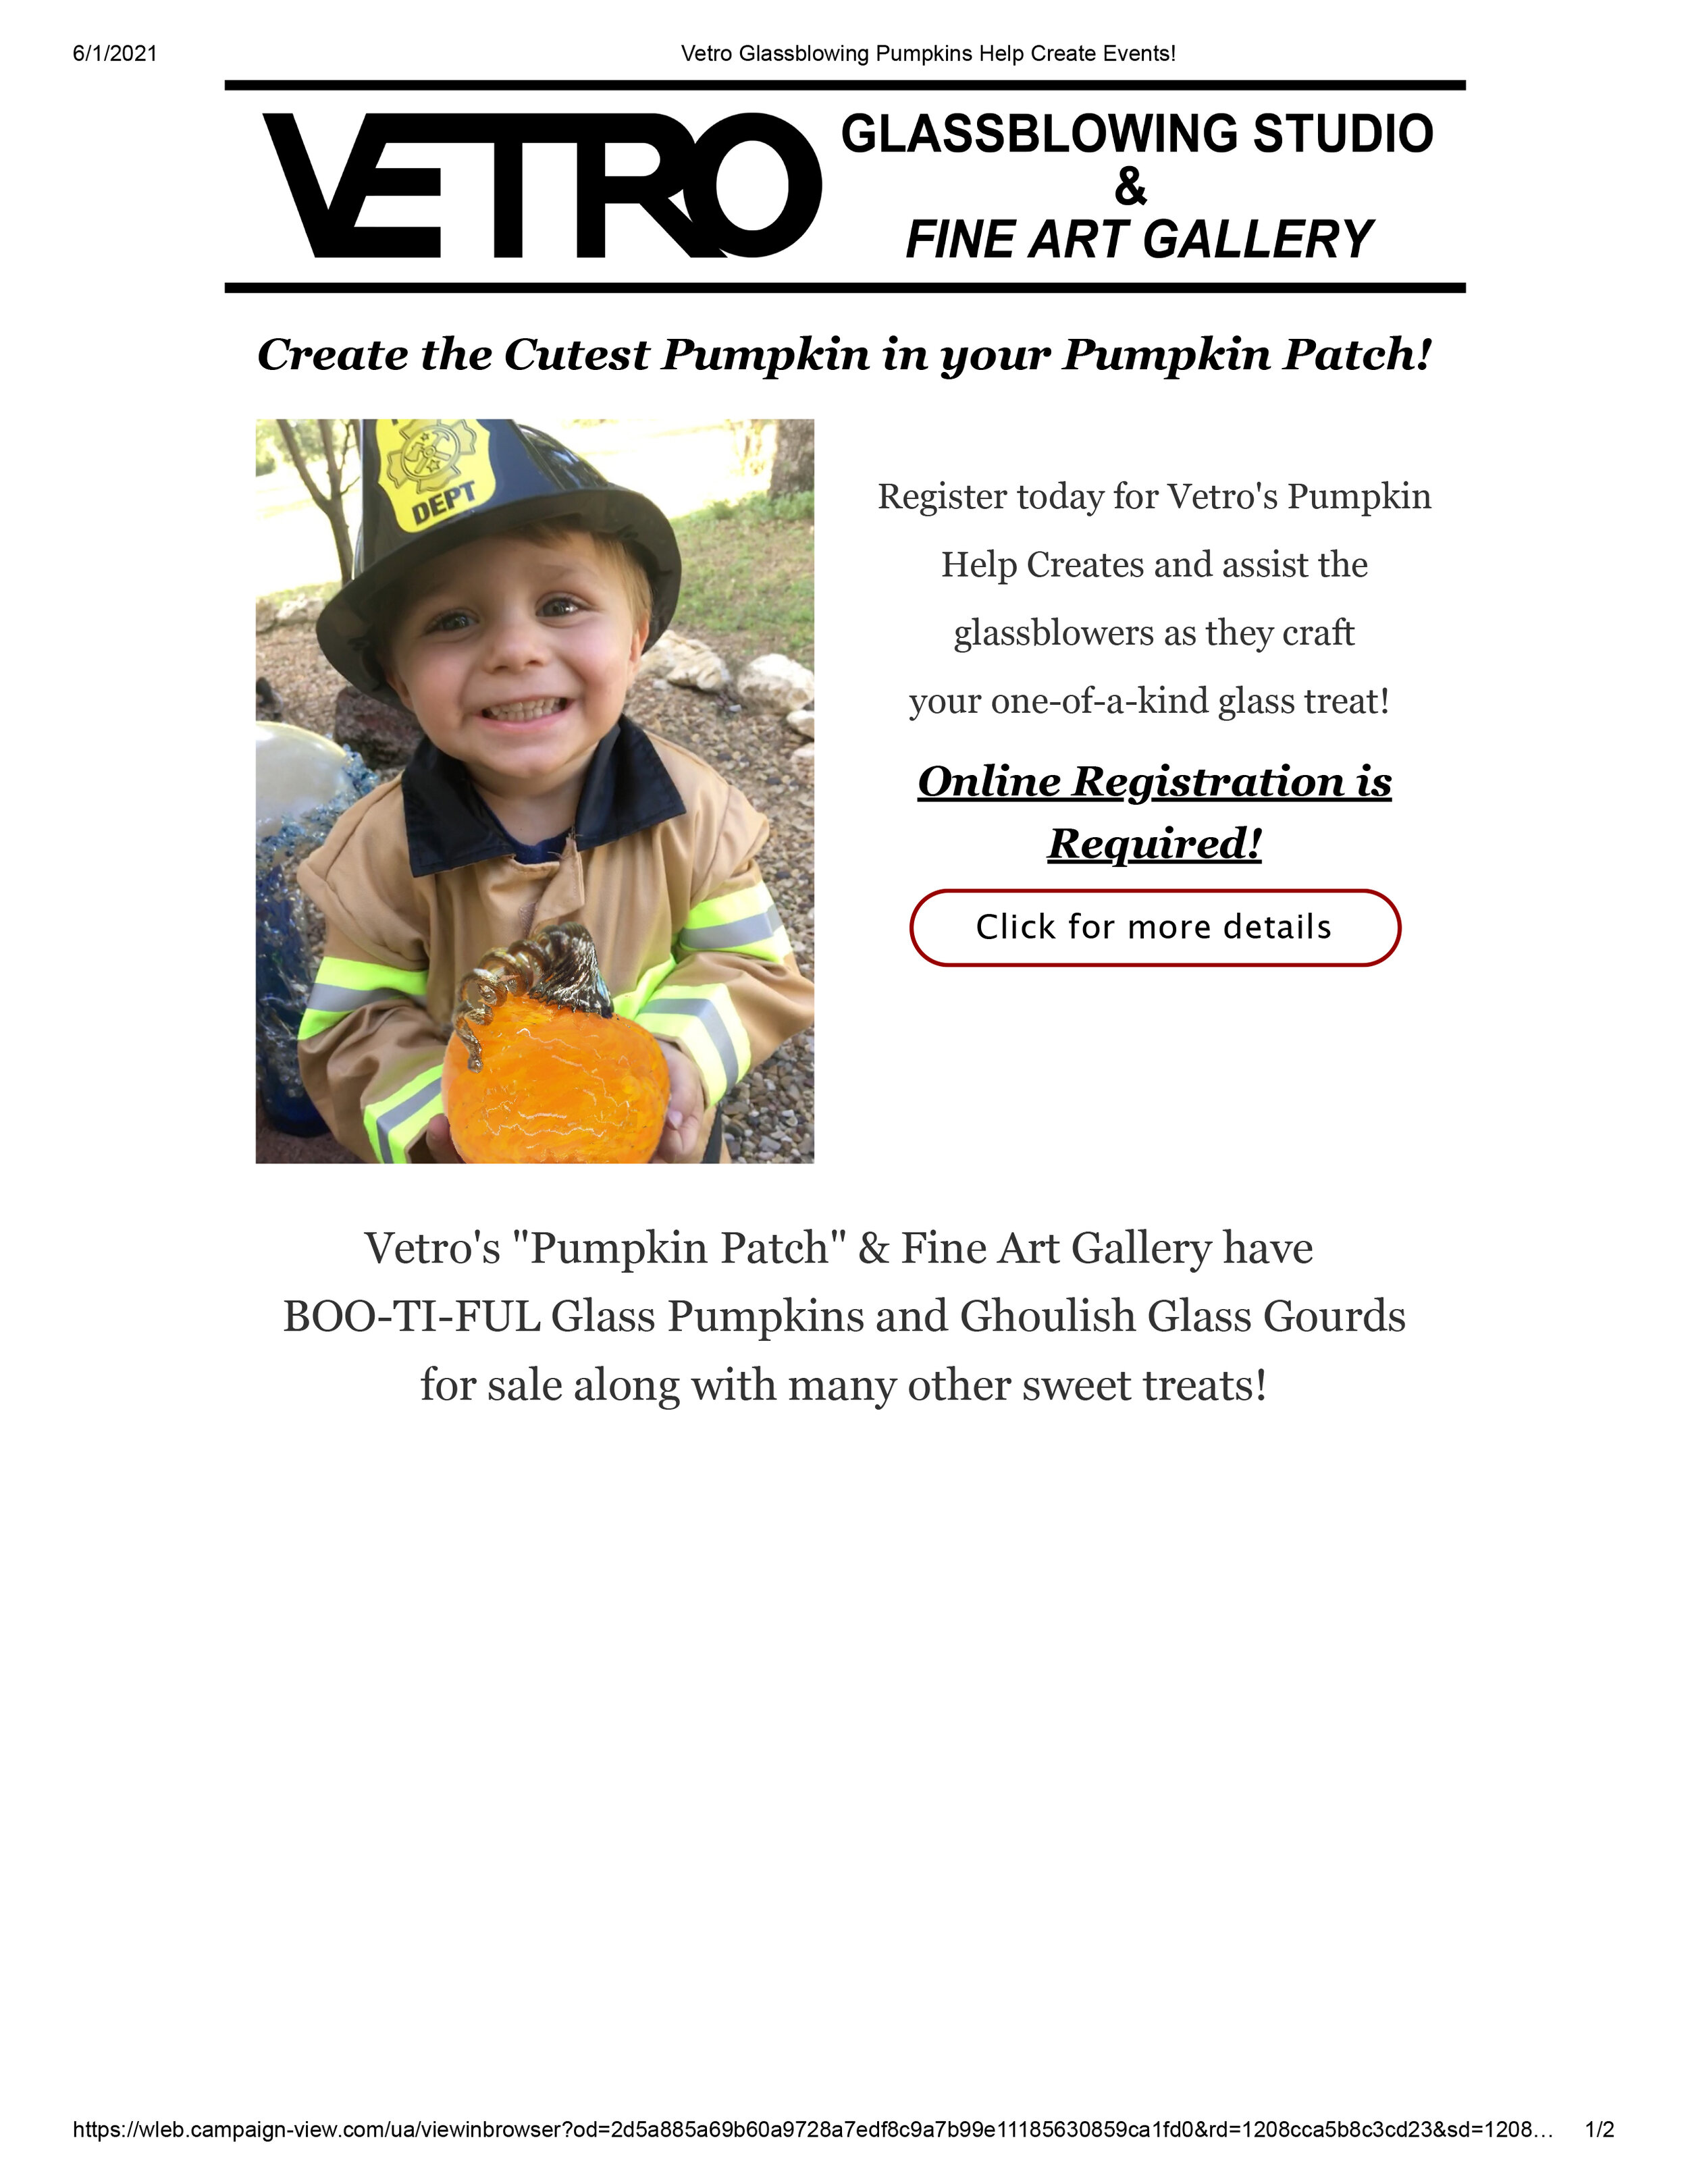 Email Campaigns -Vetro Glassblowing Studio - Create the Cutest Pumpkin in your Pumpkin Patch-1.jpg